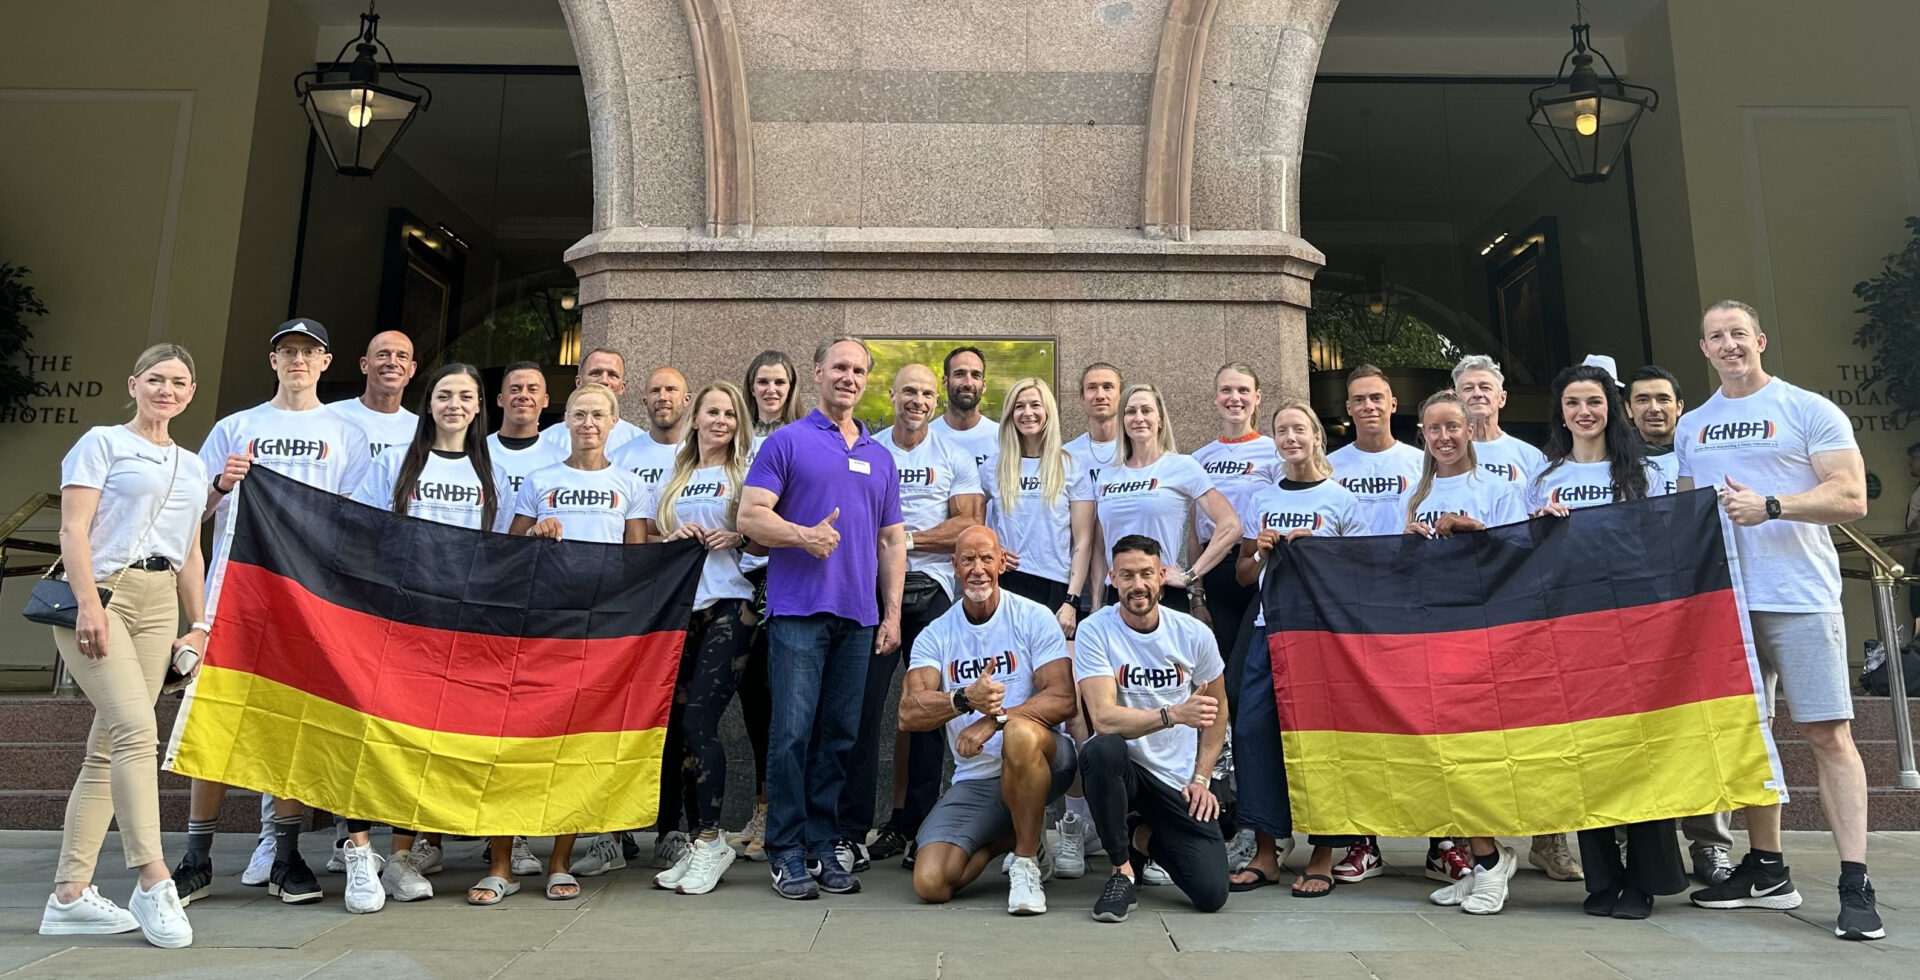 Teil des Team Germany bei den INBA/PNBA World Championships 2023 in Manchester, UK